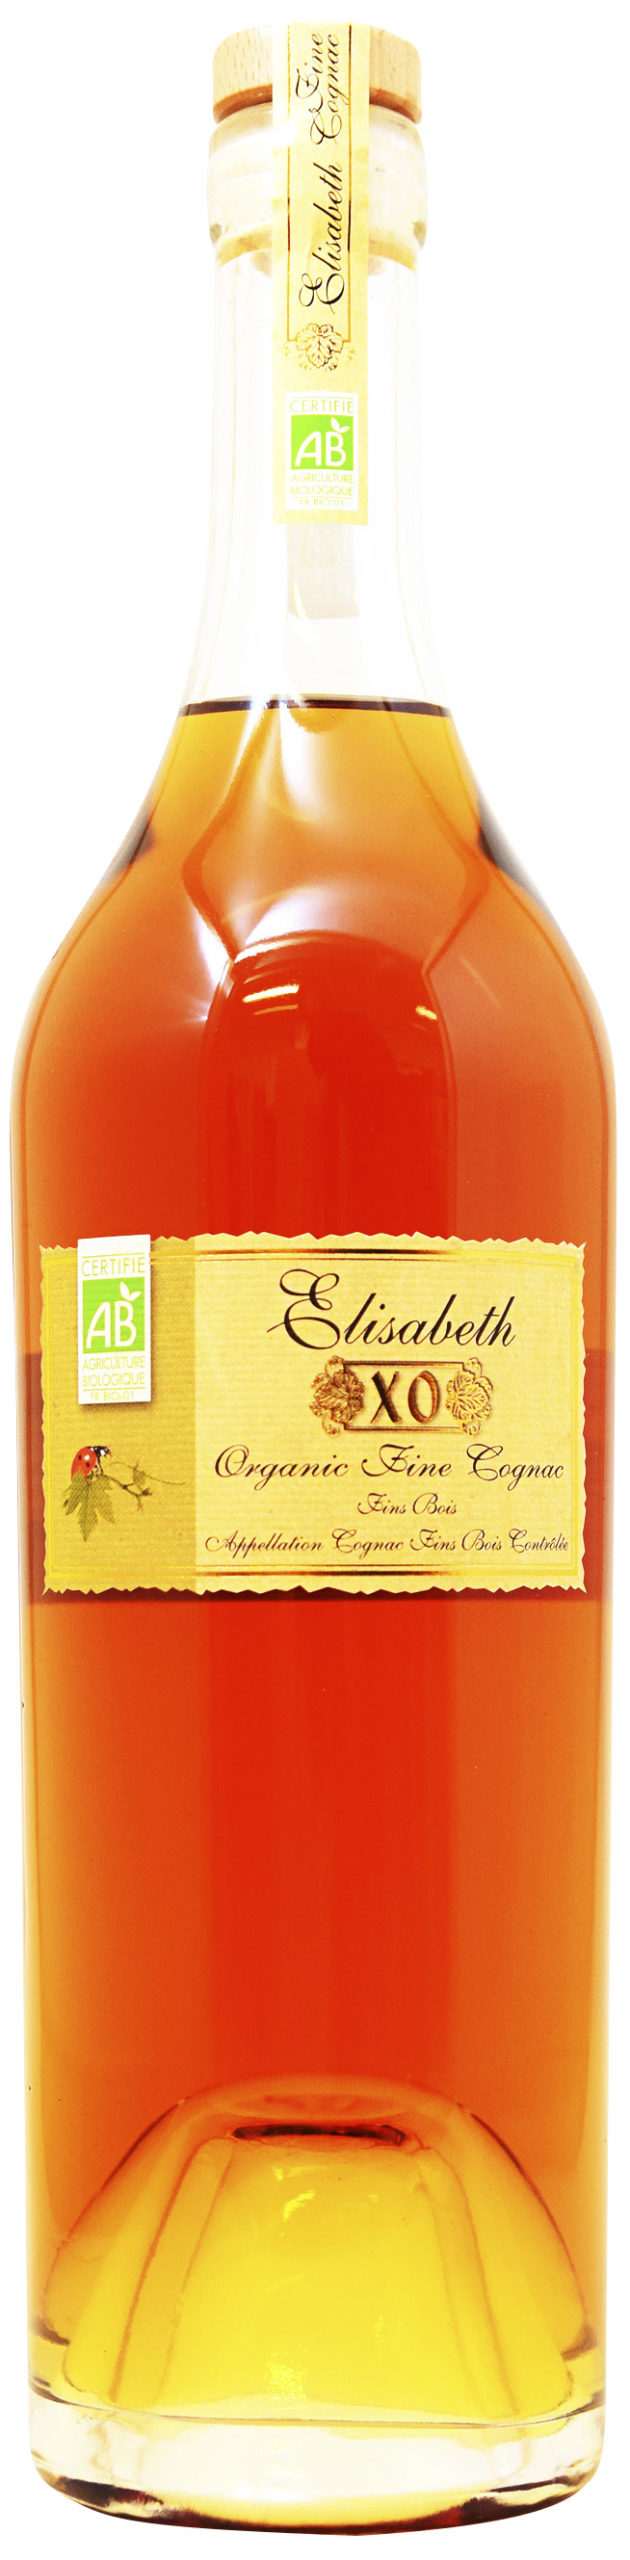 Elisabeth XO Organic Fine Cognac